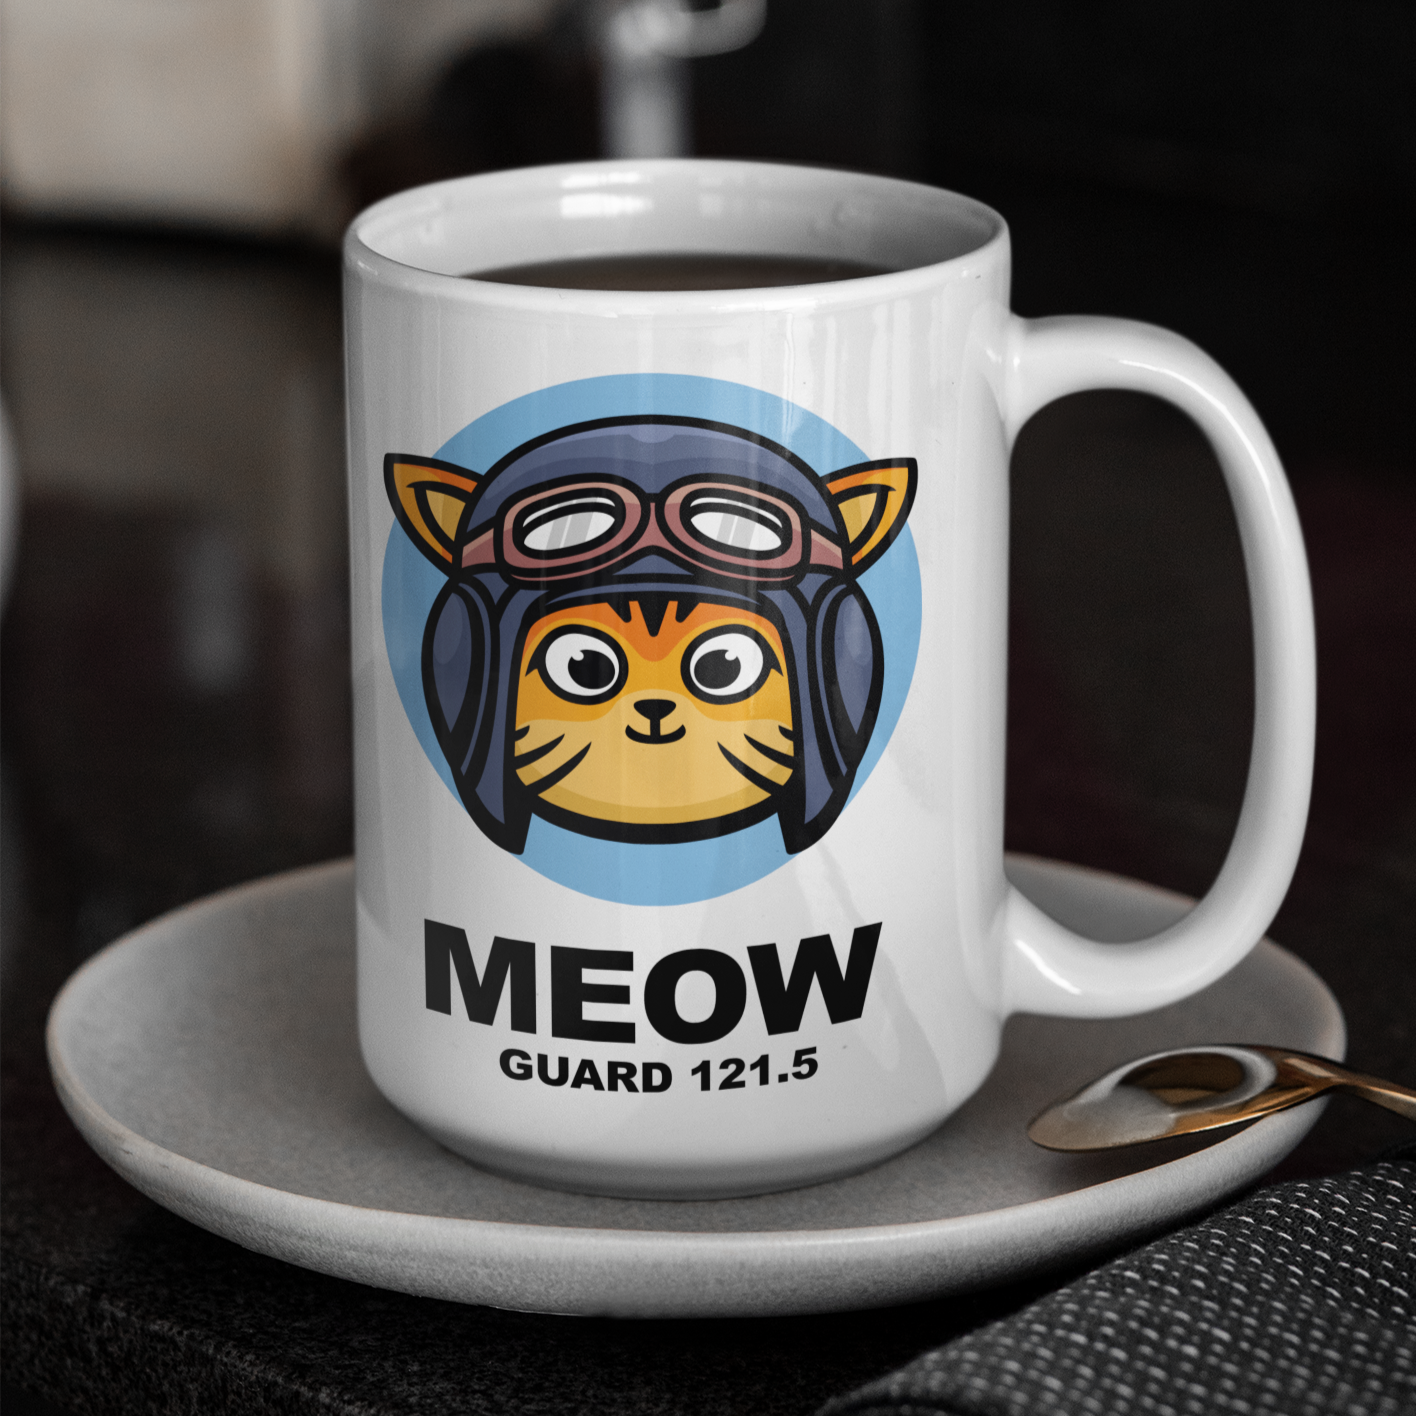 White mug on saucer with cartoon aviator cat with Meow Guard 121.5 text